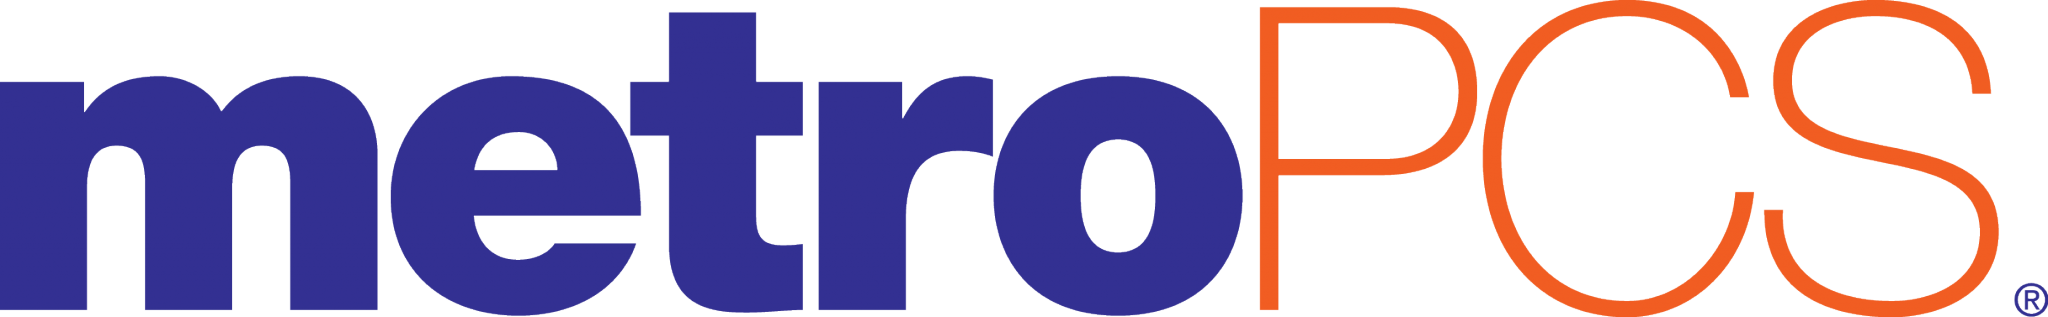 metropcs-logo.png